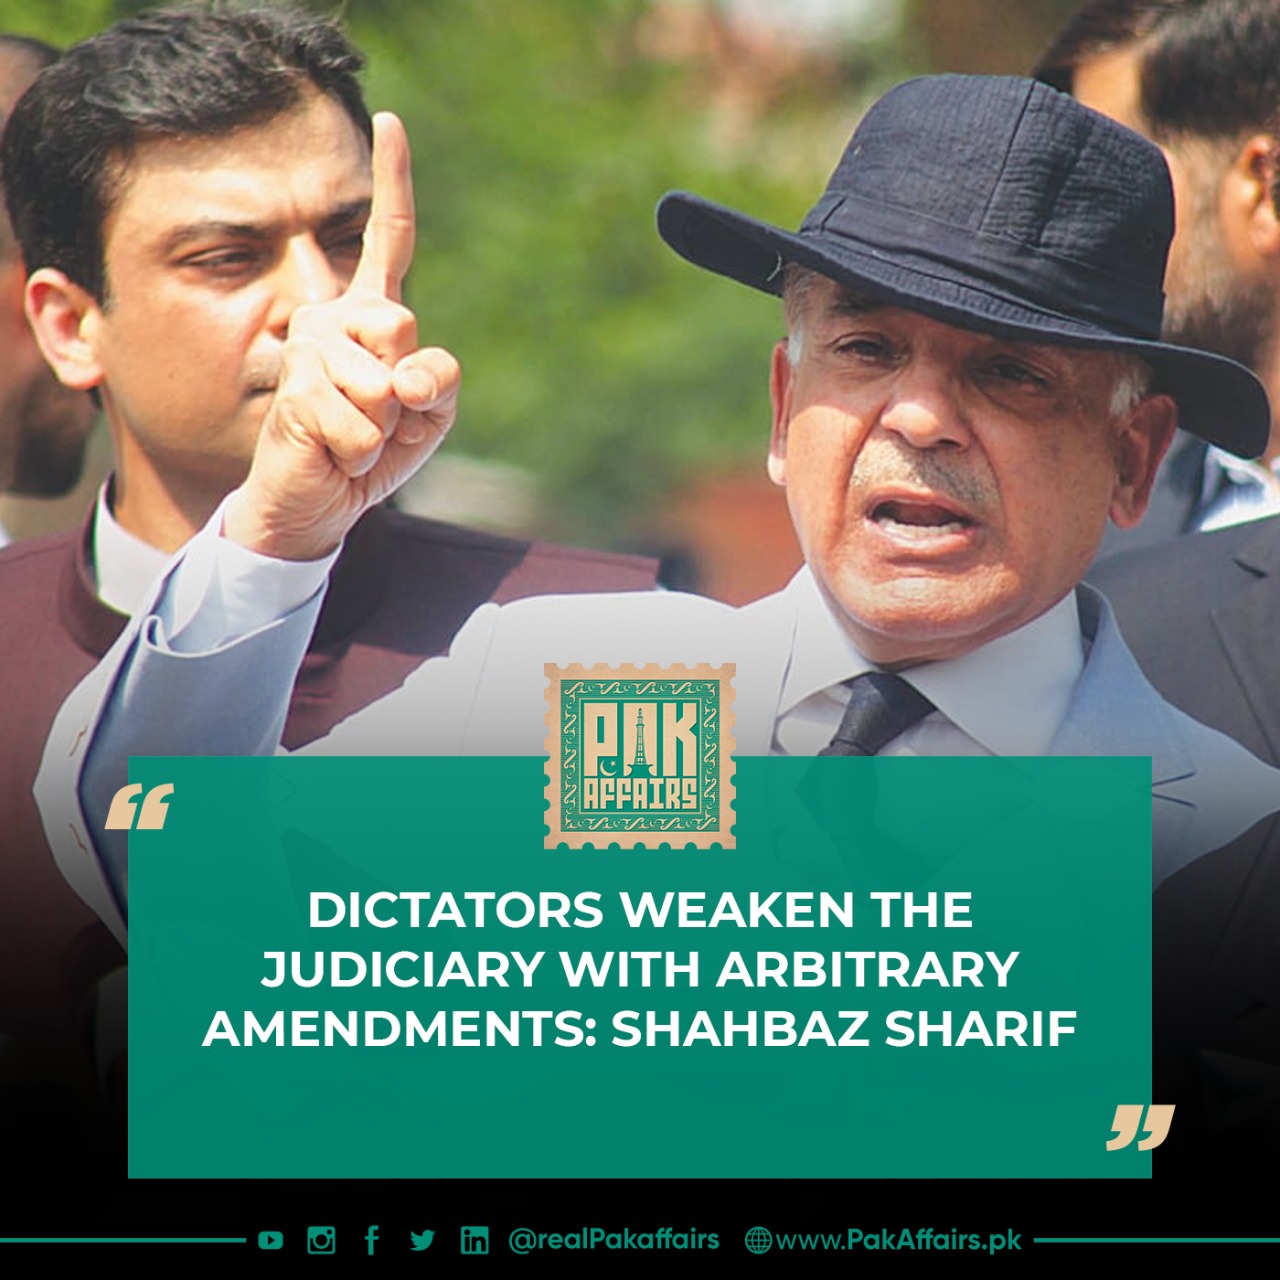 Dictators weaken the judiciary with arbitrary amendments: Shahbaz Sharif.